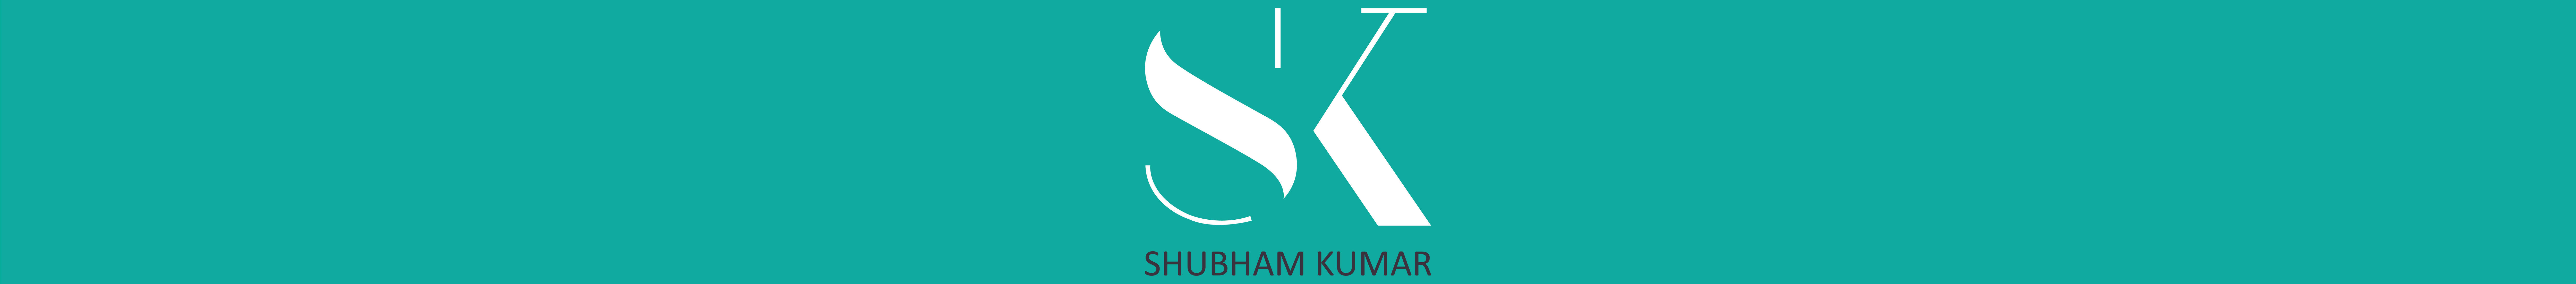 Shubham Kumar 的個人檔案橫幅